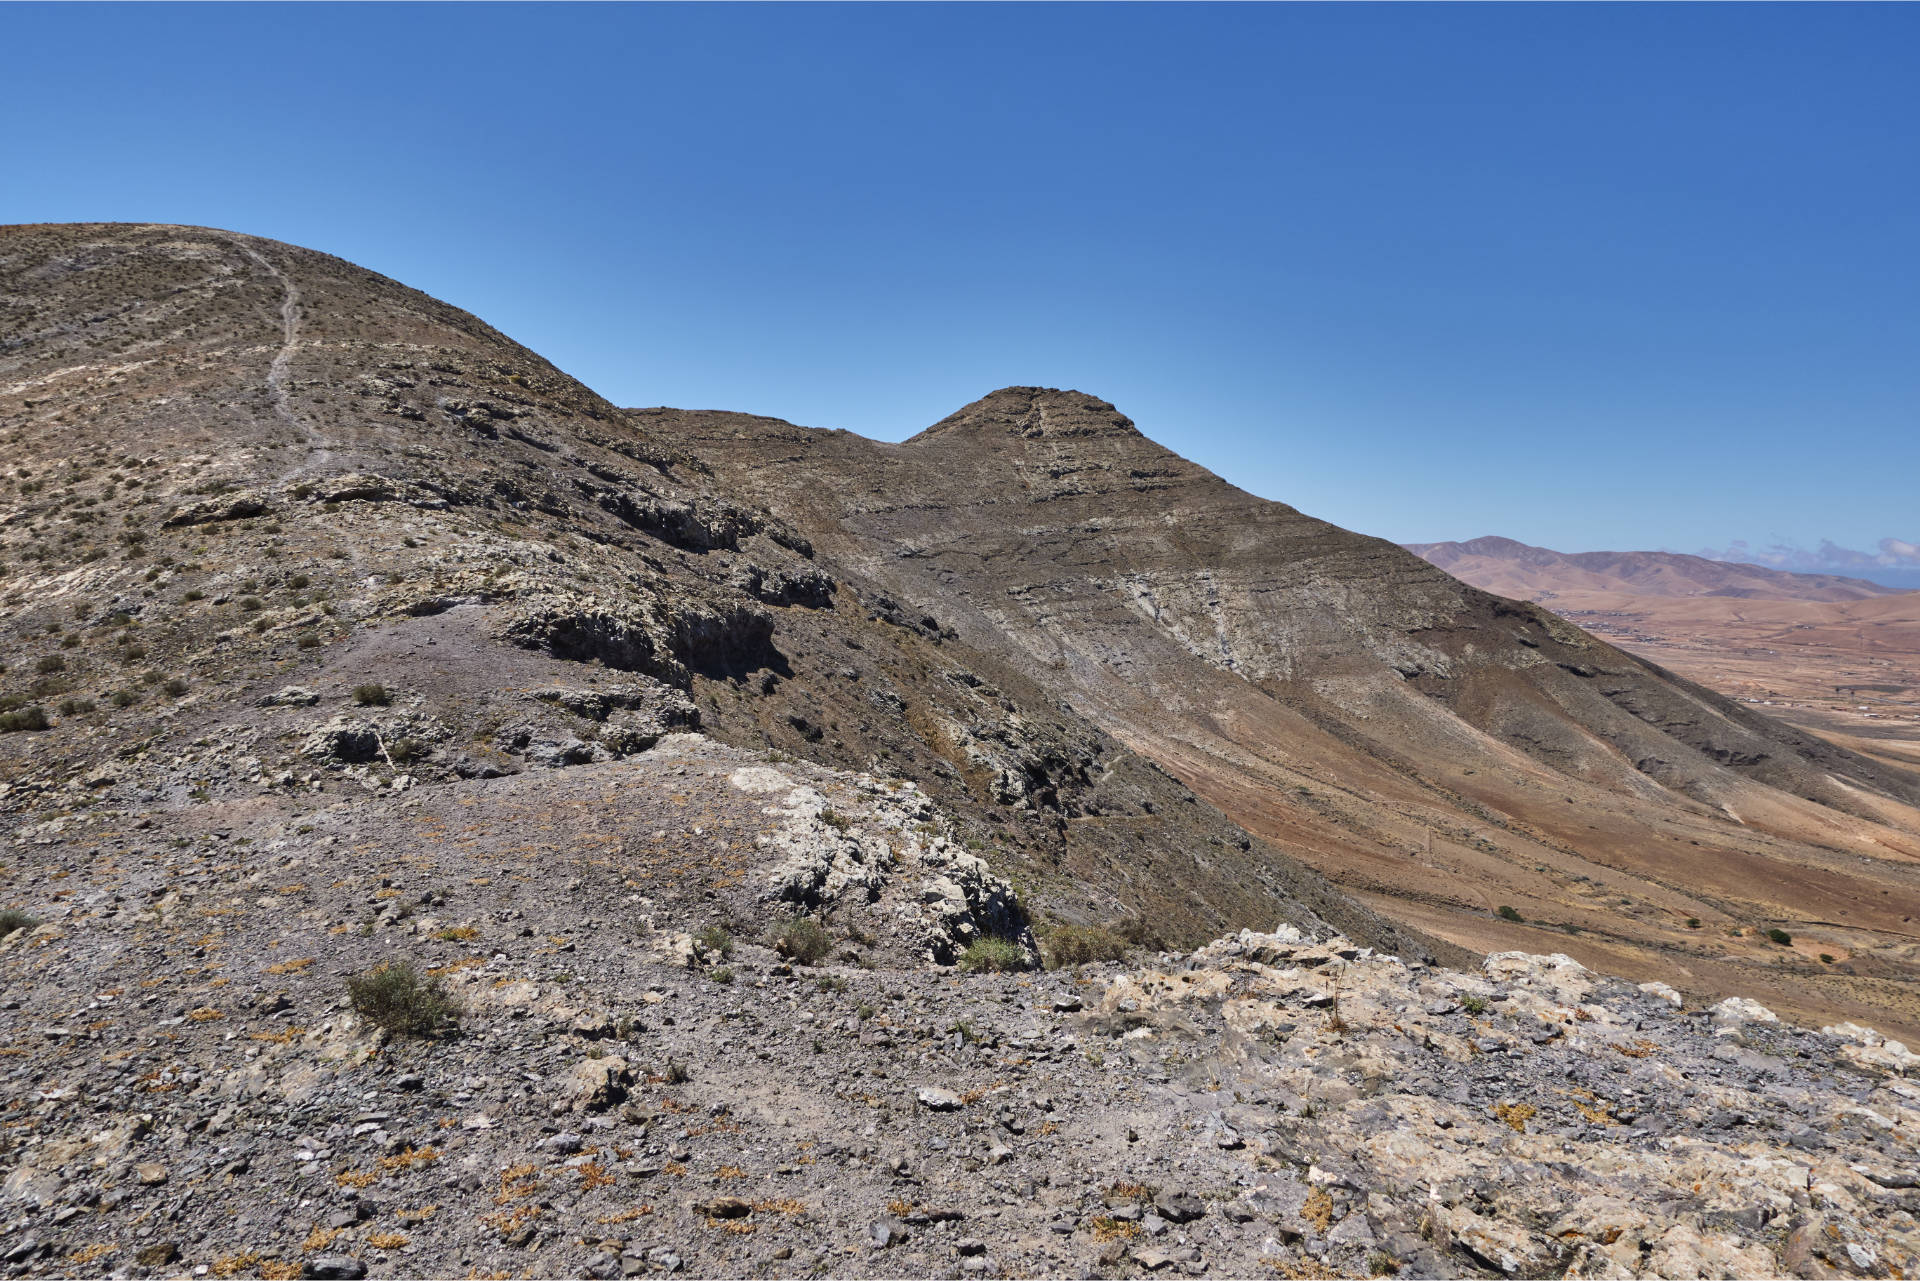 Trailrunning Fuerteventura – am degollada zwischen Morro de Facay (520m) und Morro de Cagadas Blandas (525m).